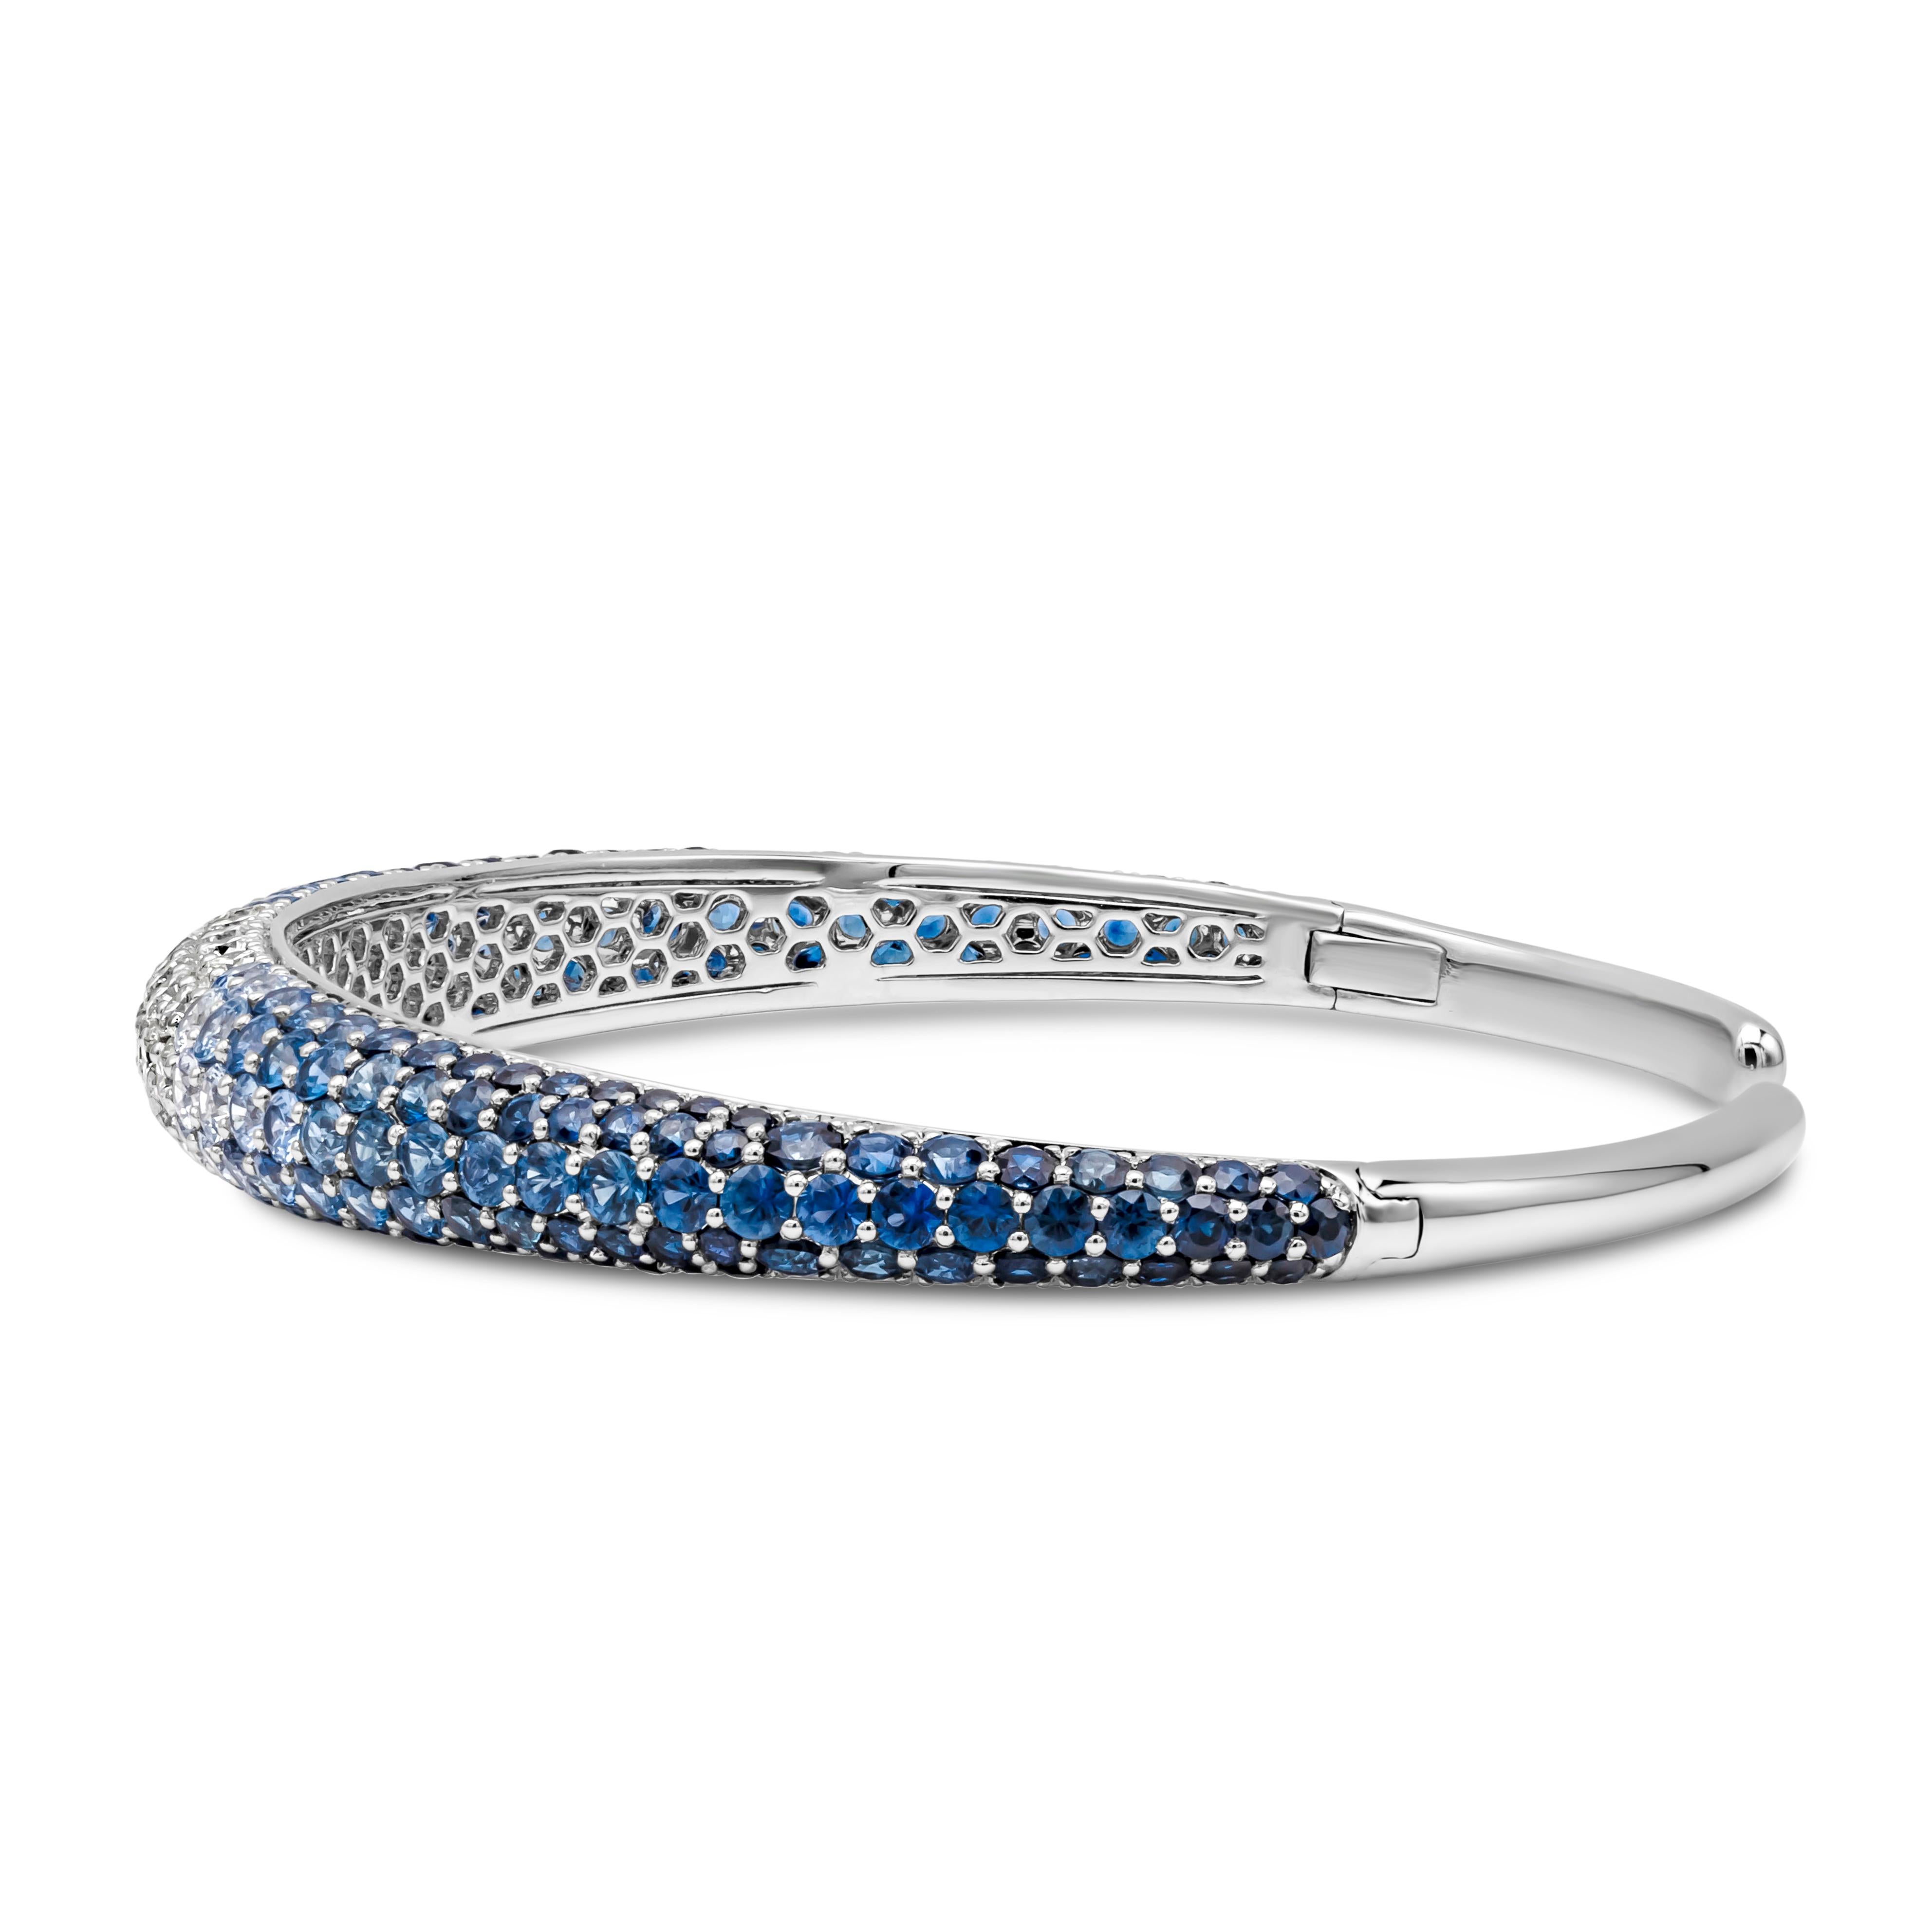 Contemporary Roman Malakov 10.05 Carats Total Round Cut Sapphire And Diamond Bangle Bracelet For Sale